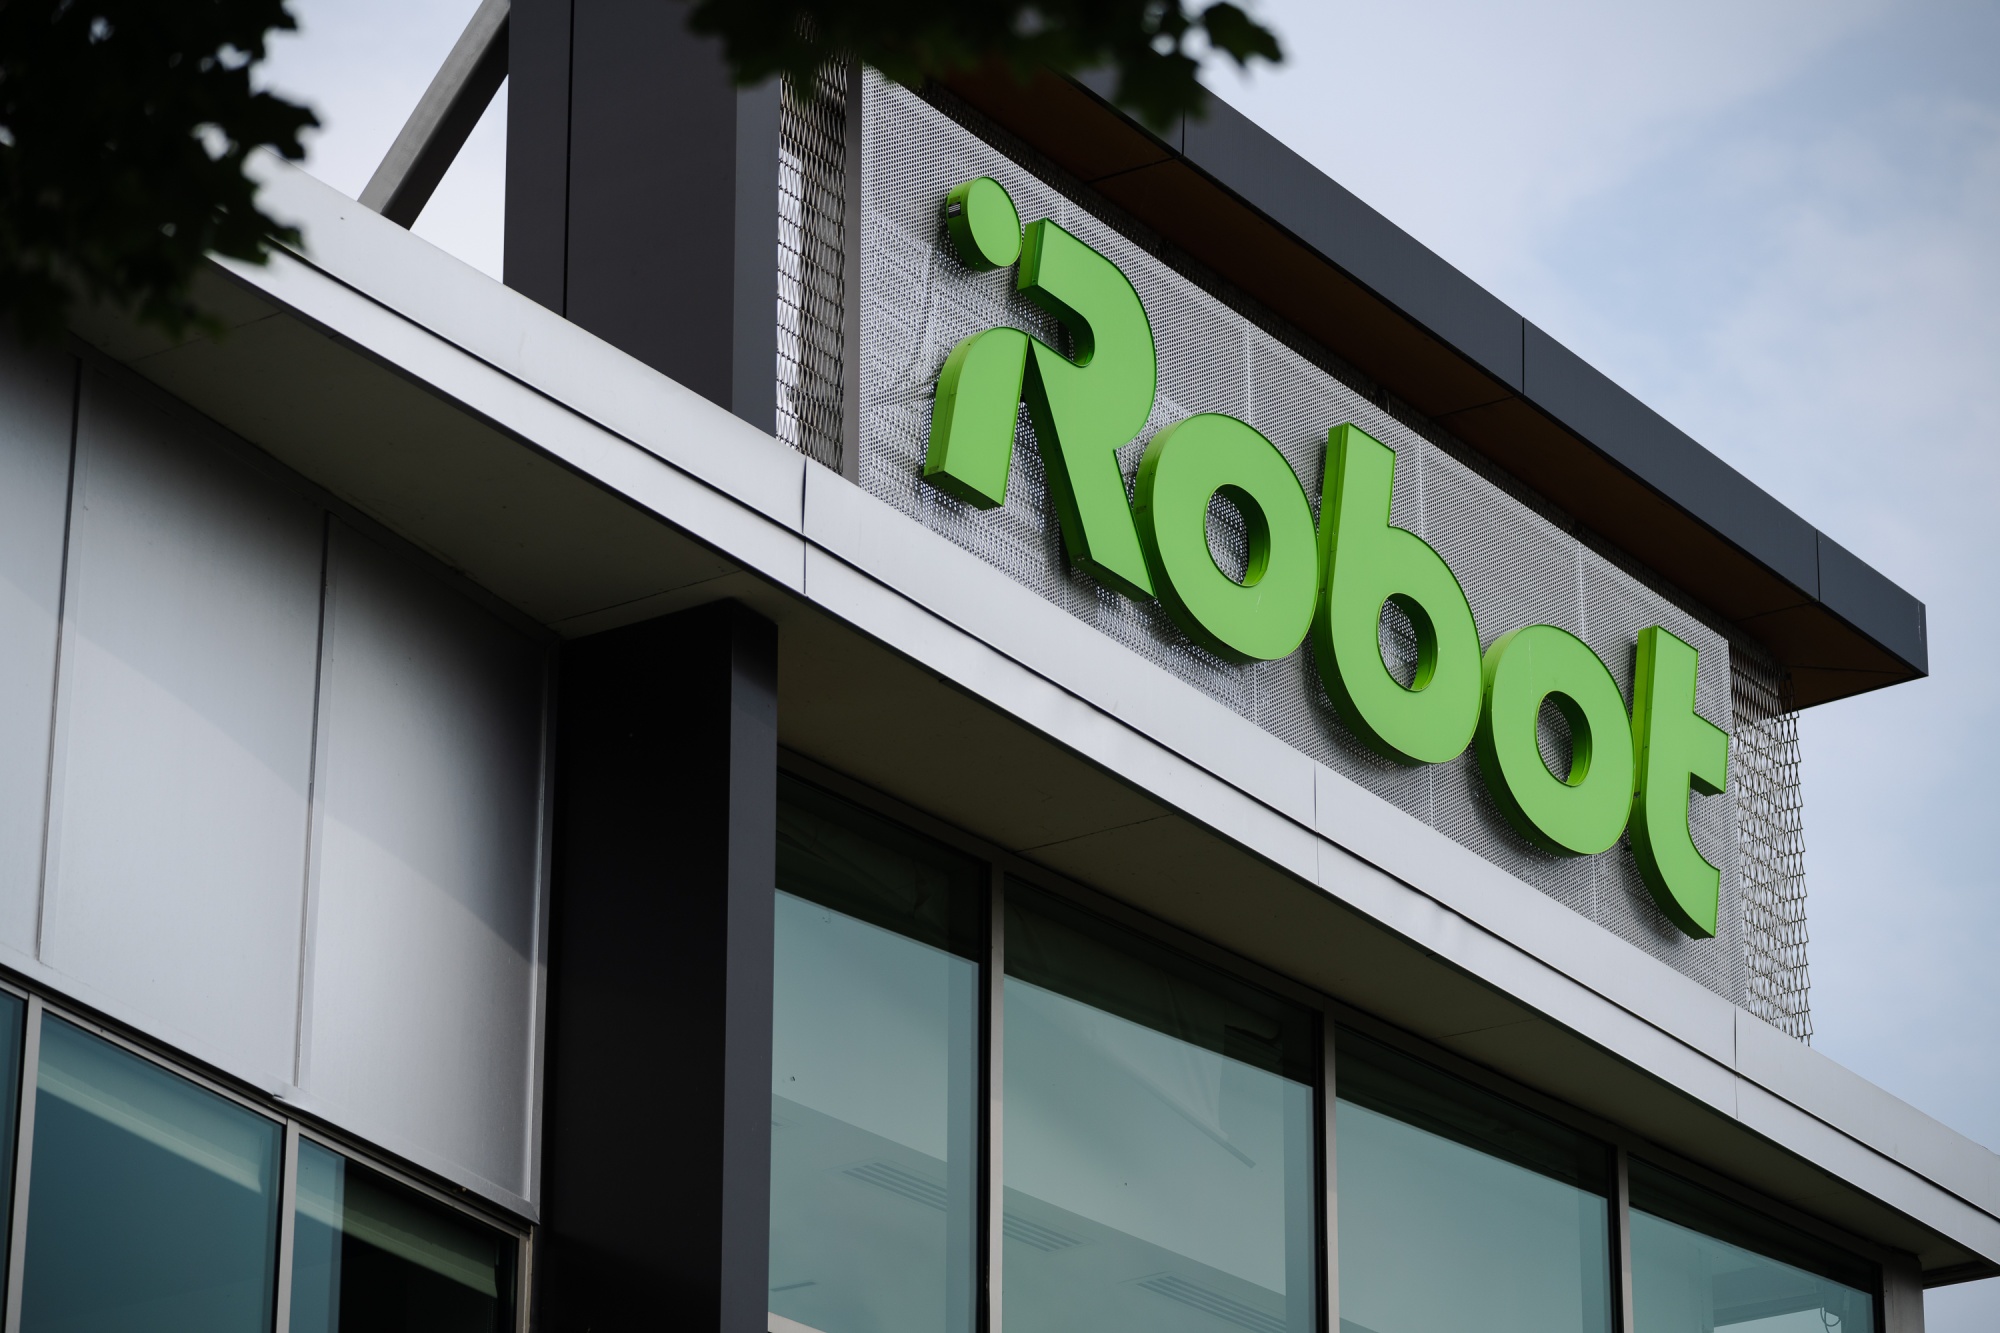 iRobot offers a Roomba membership program and I am (good) shook.